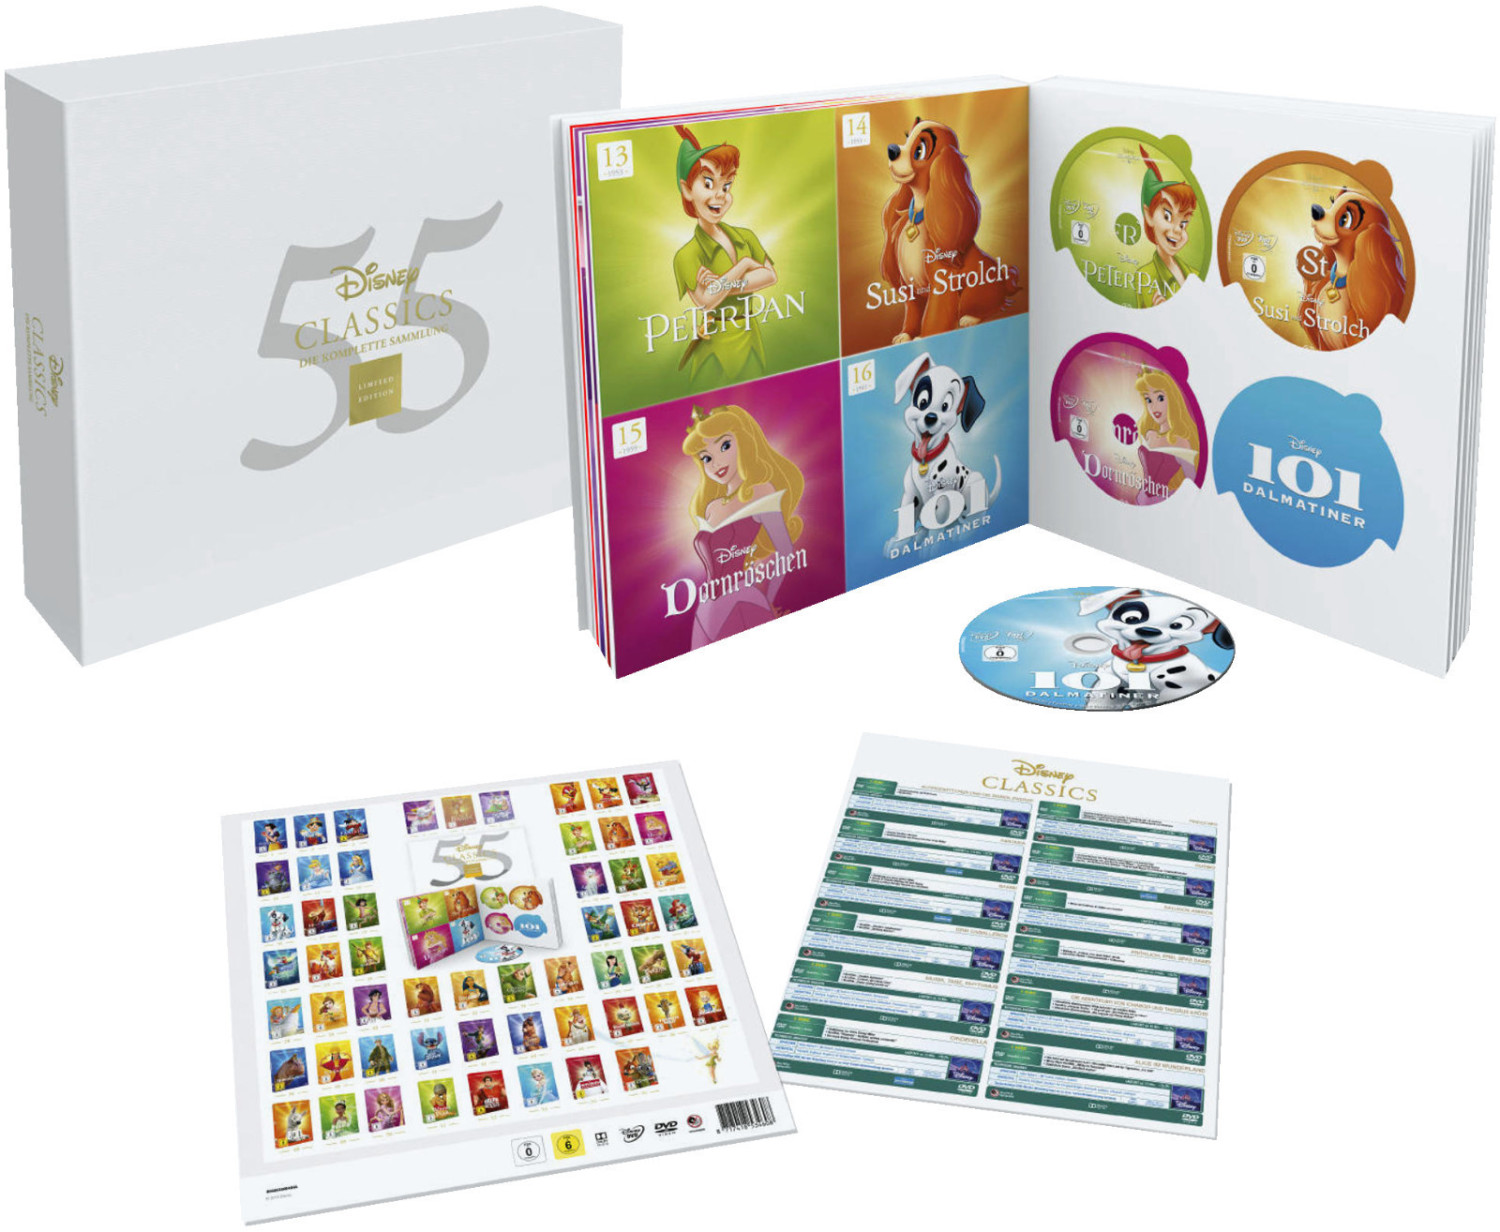 Disney Classics Komplettbox [55 DVDs]